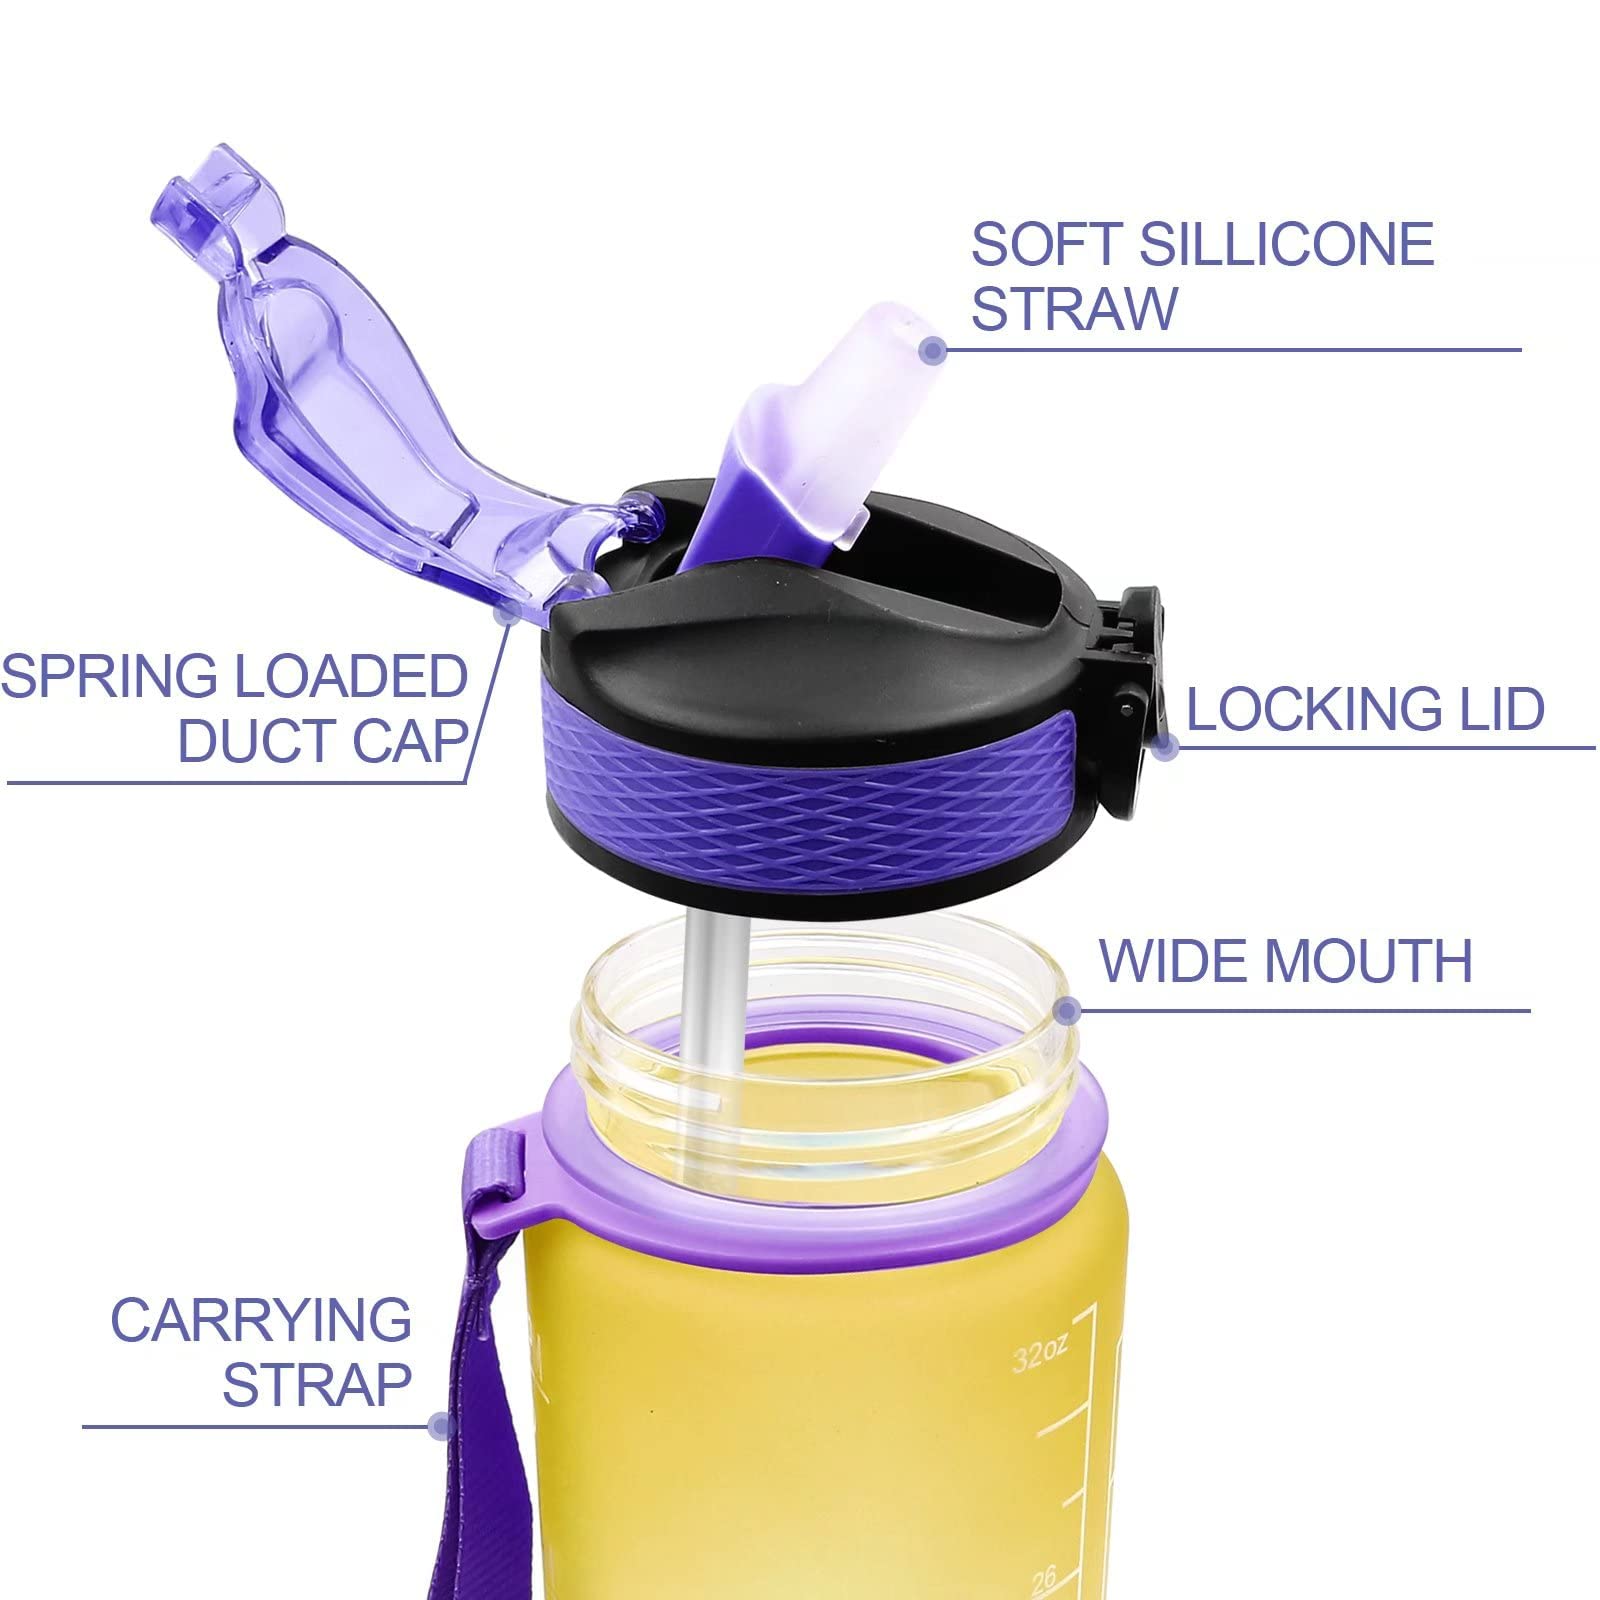 VIO 1 Litre Water Bottle with Straw, Time Markings Motivational Sport Water Bottle, Drinks Bottle for Girls, Boy, Fitness, Outdoor, Cycling, Gym, School (Blue purple)